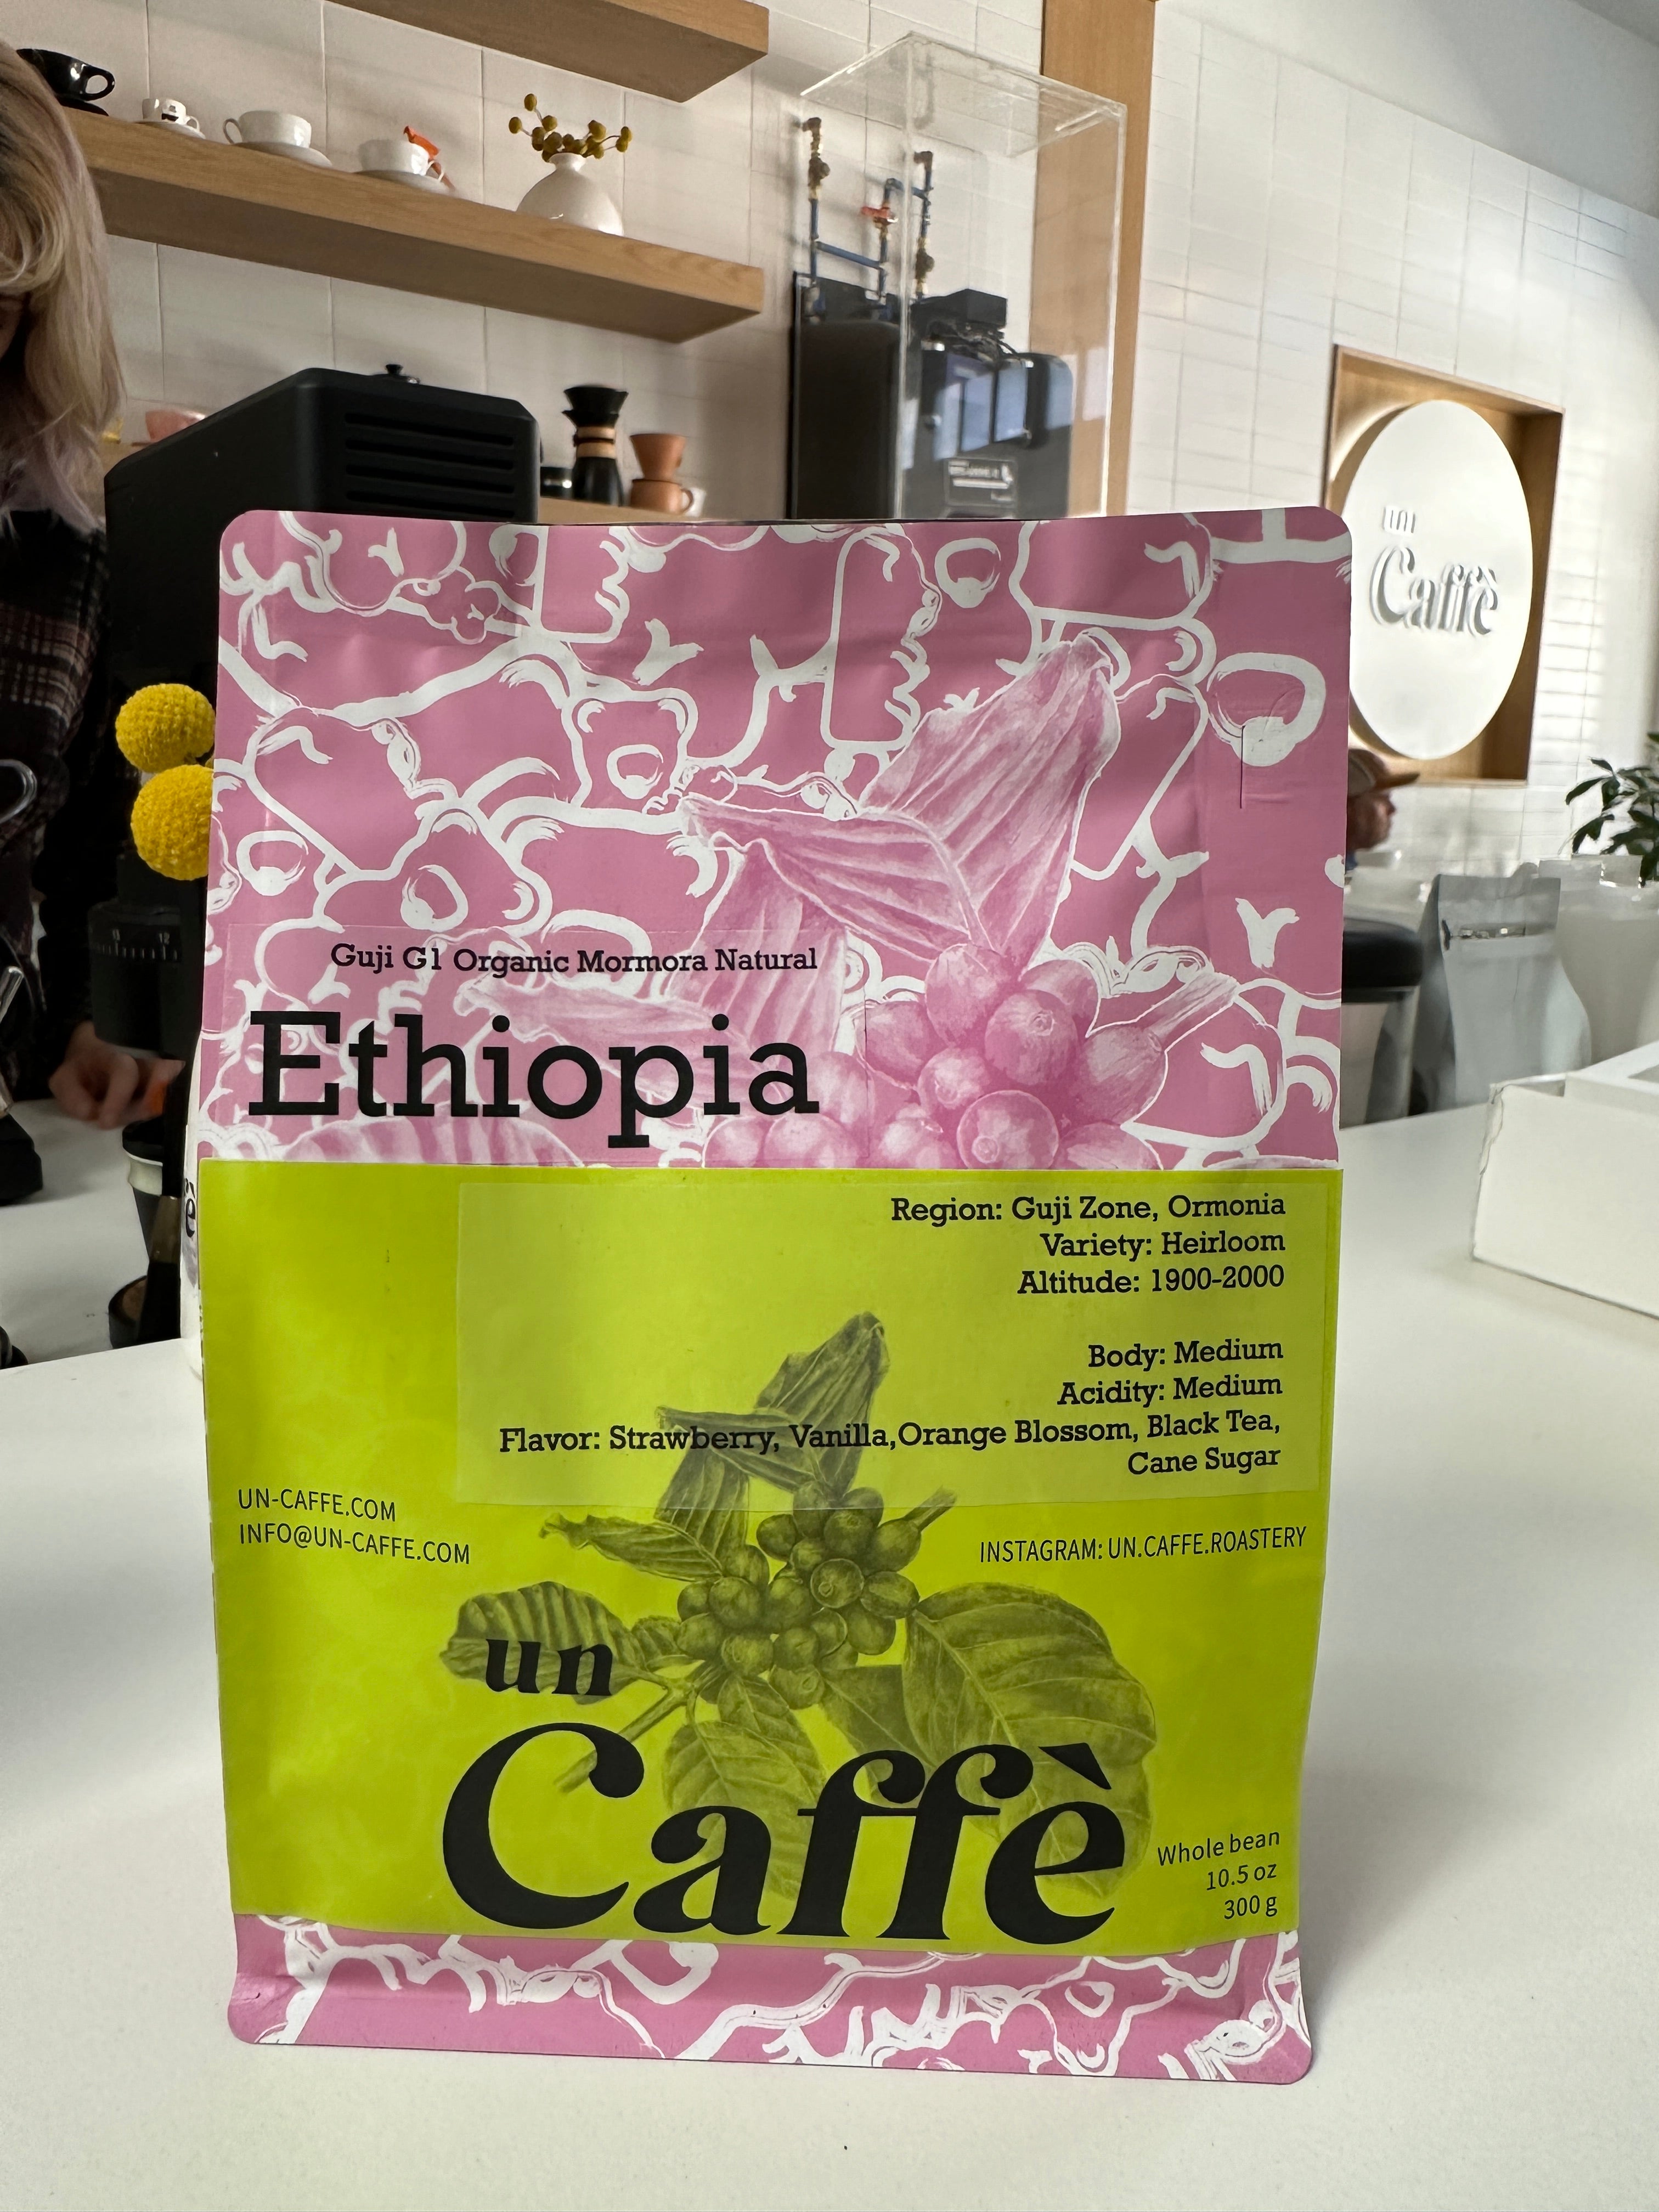 Ethiopia, Guji G1 Organic Mormora Natural - Un Caffè